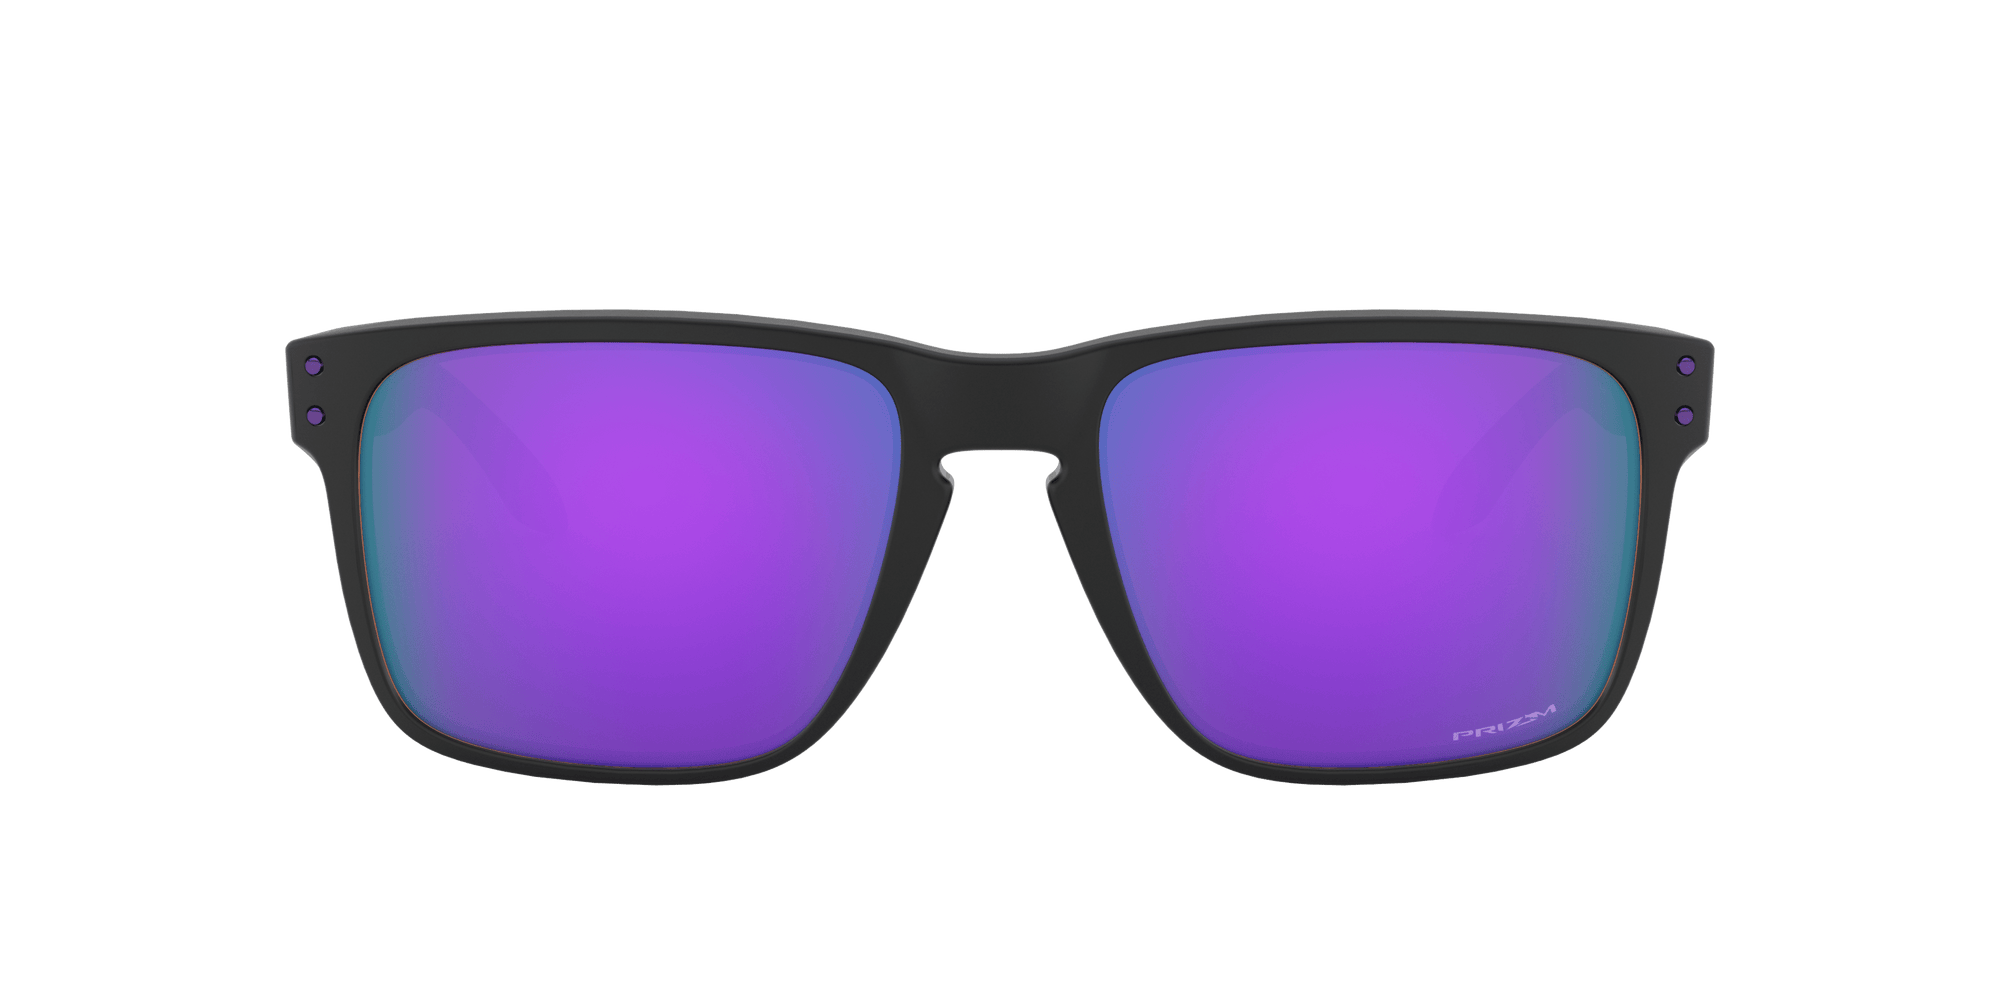 OAKLEY Holbrook XL Matte Black - Prizm Violet Sunglasses Sunglasses Oakley 